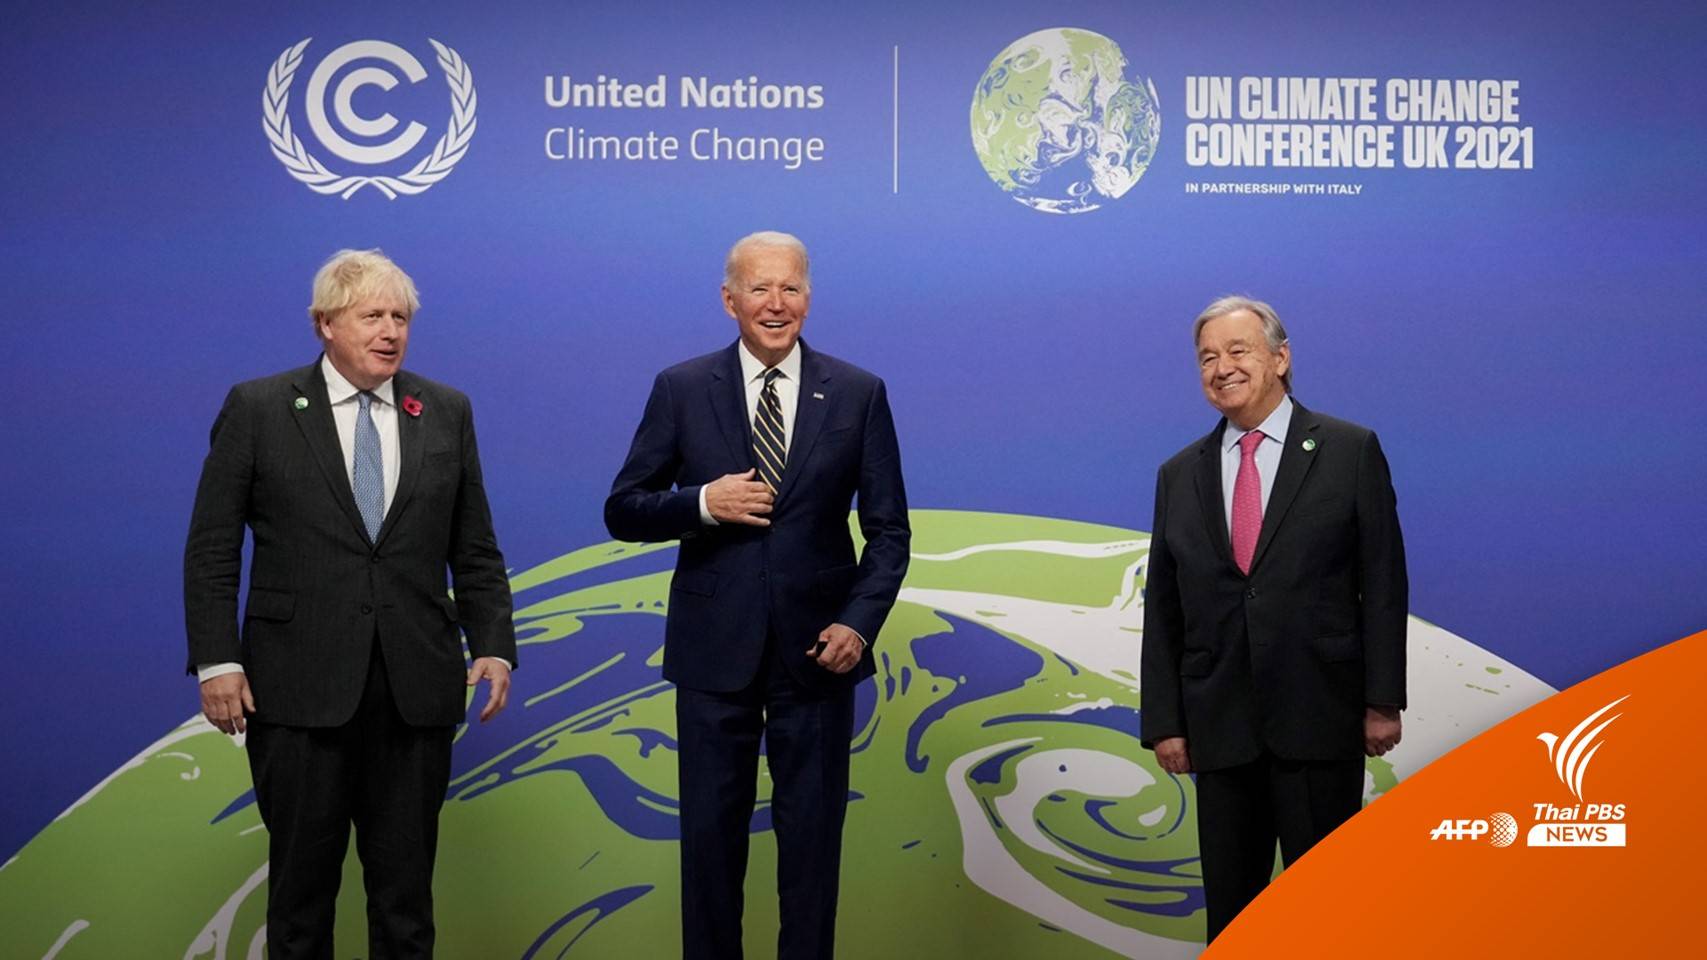 COP26 ความหวังสุดท้าย หลุดพ้นโลกร้อน